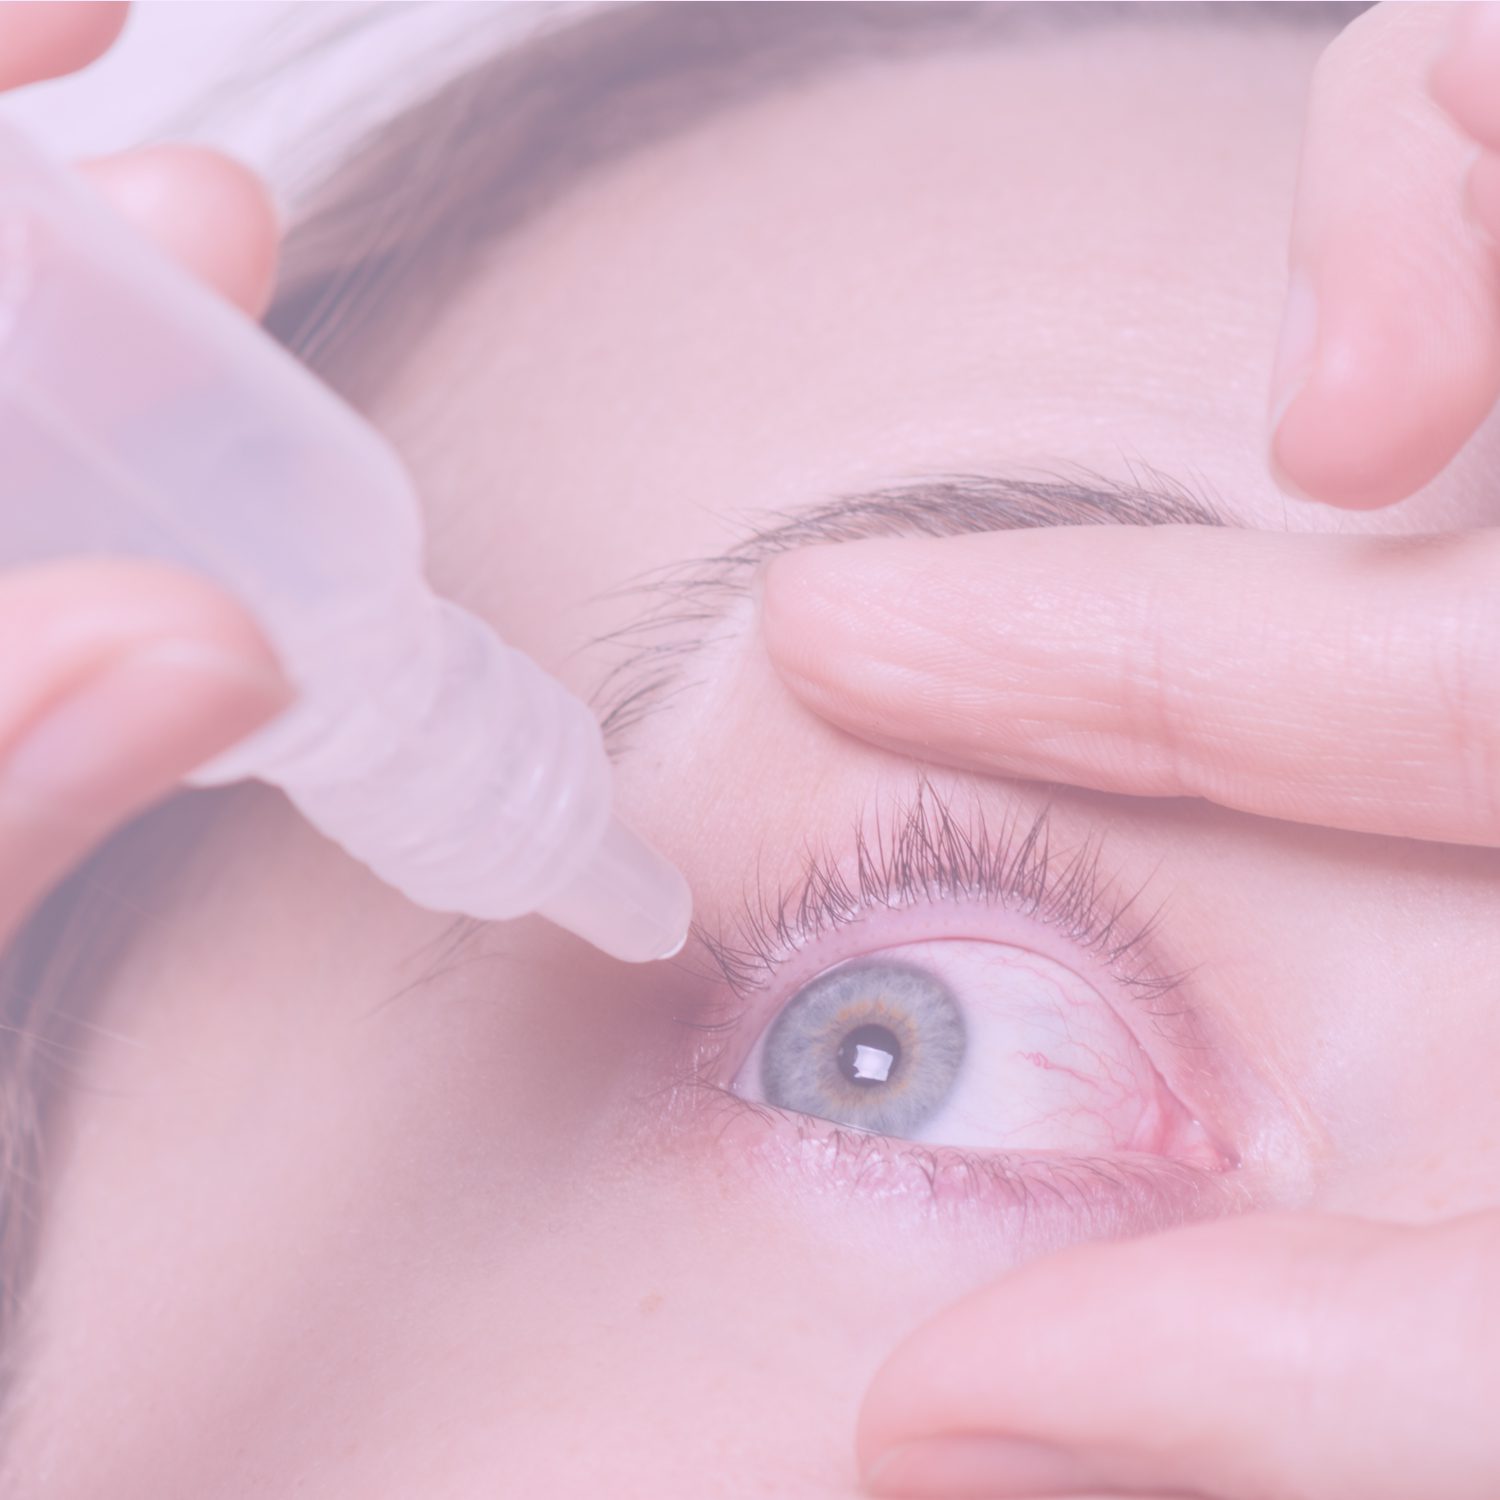  Eye Allergies: 10 Natural Remedies for Eye Allergy